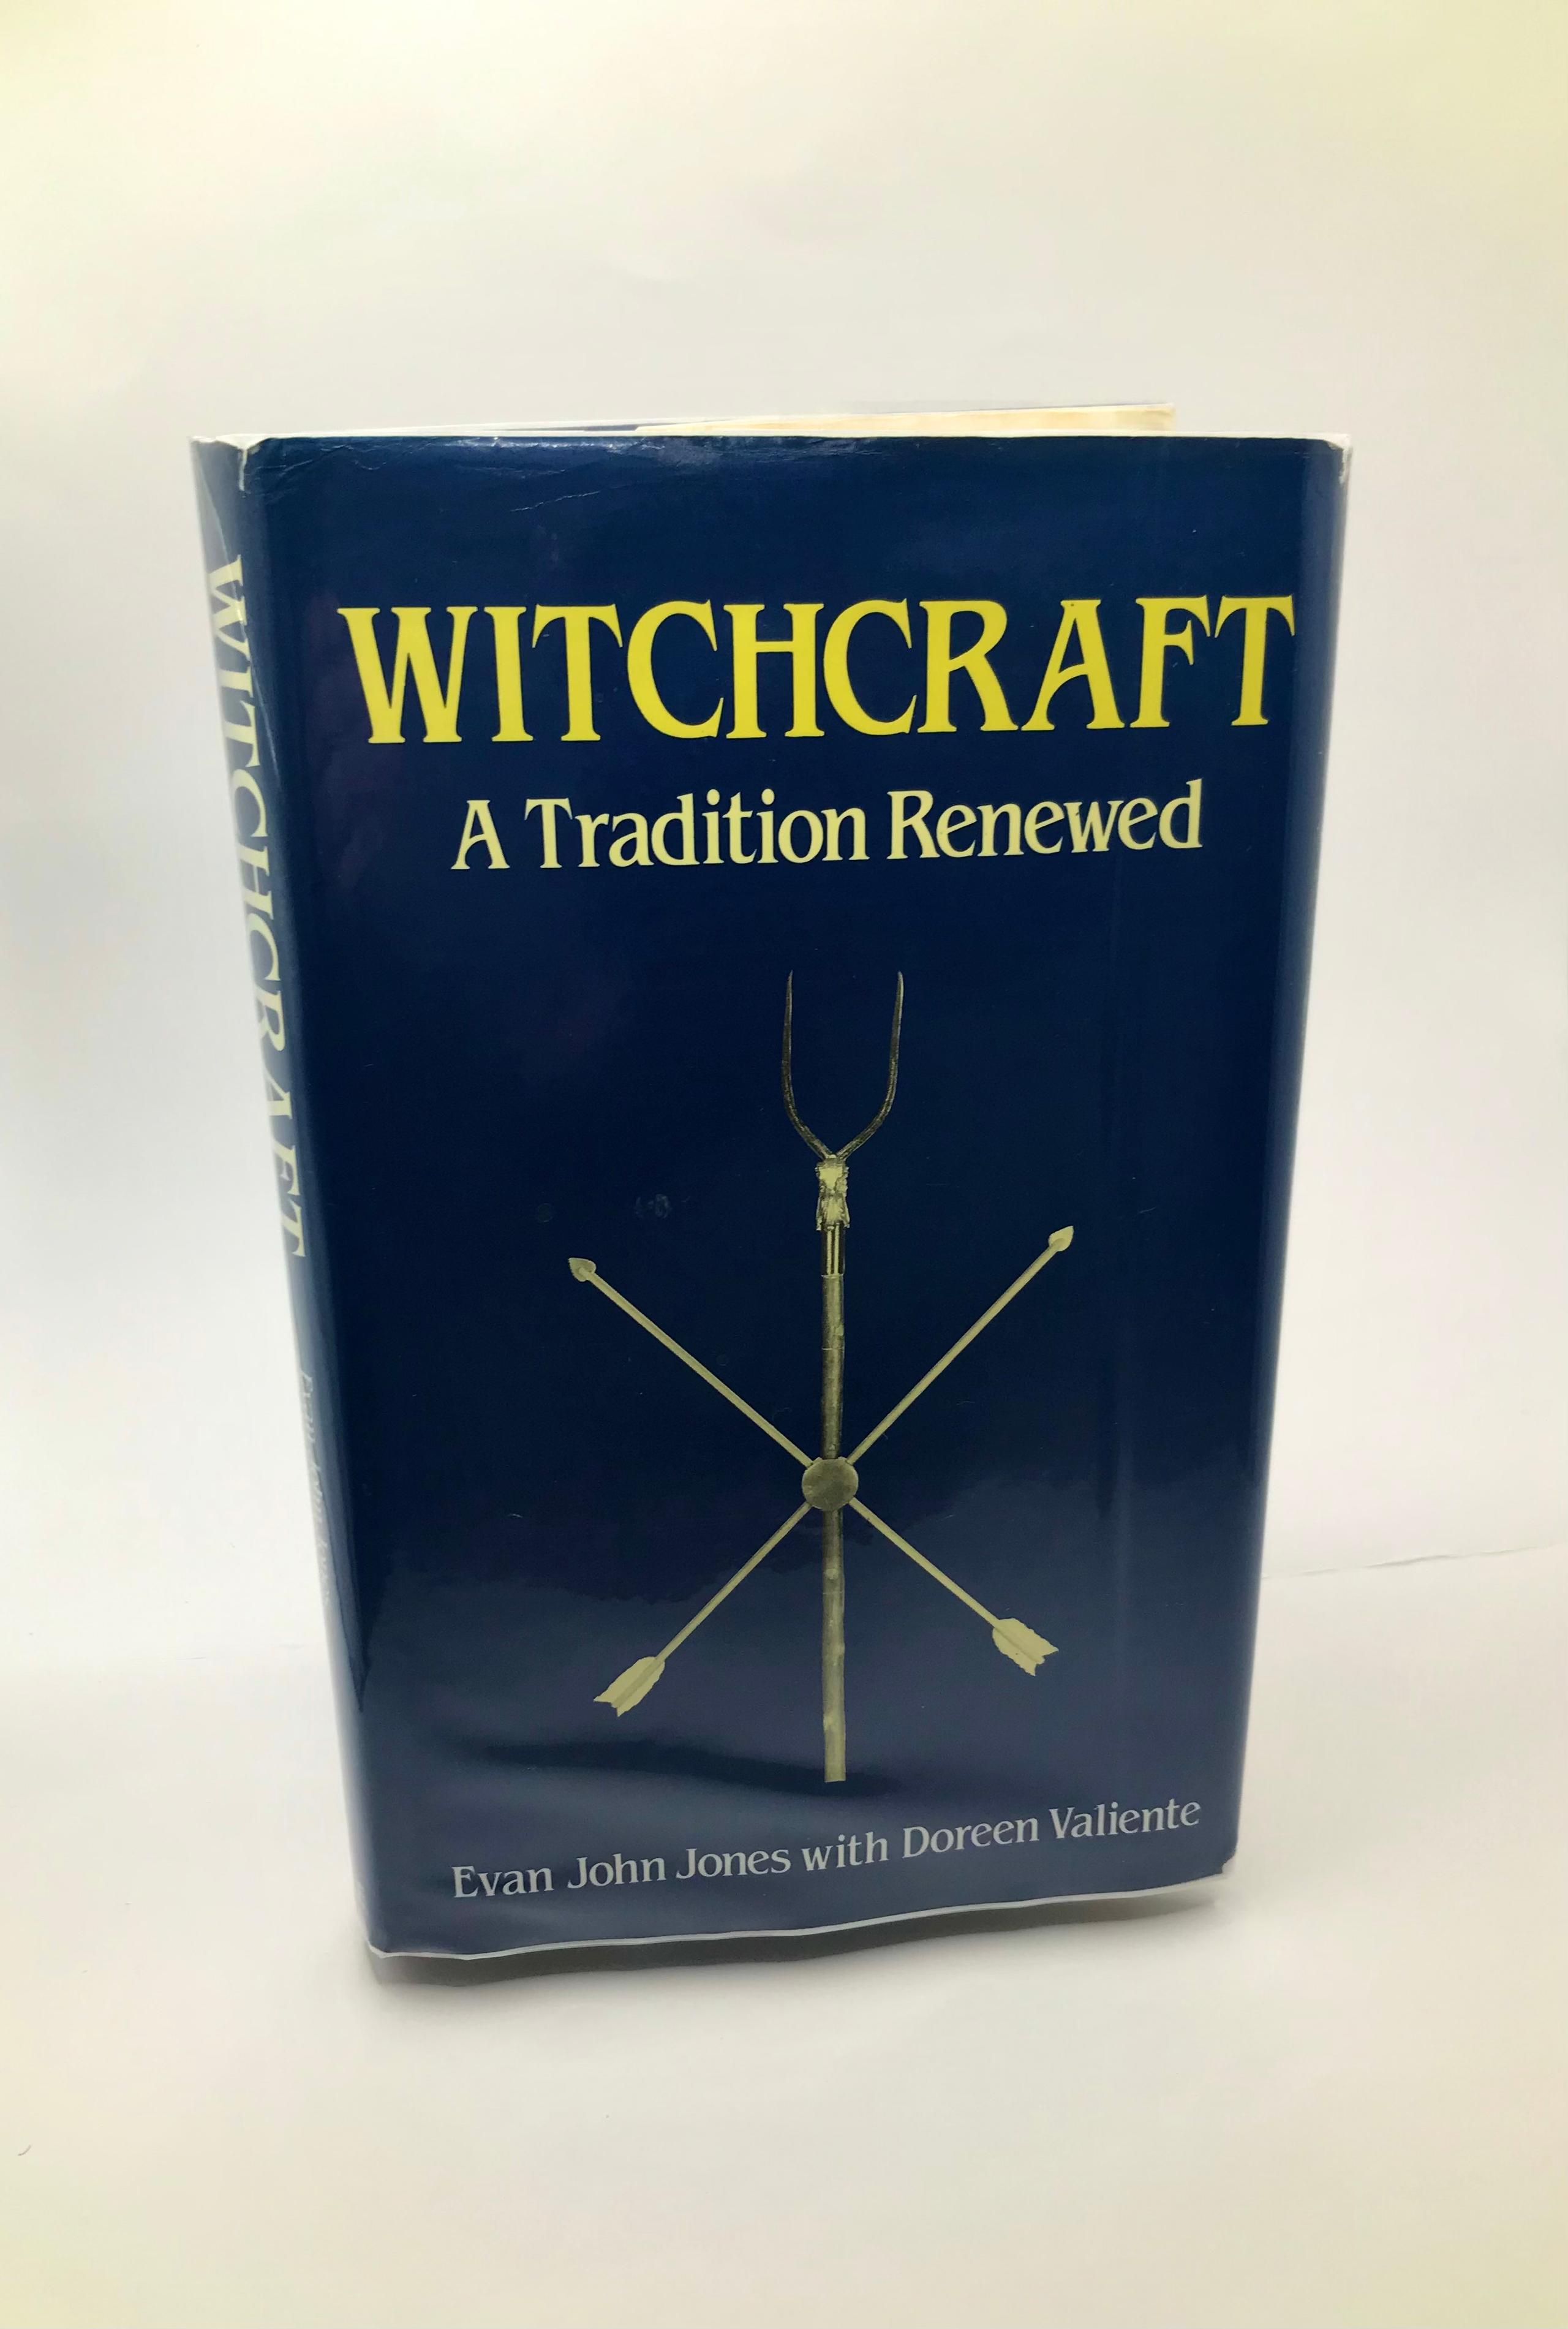 Witchcraft: A Tradition Renewed by Evan John Jones With Doreen Valiente